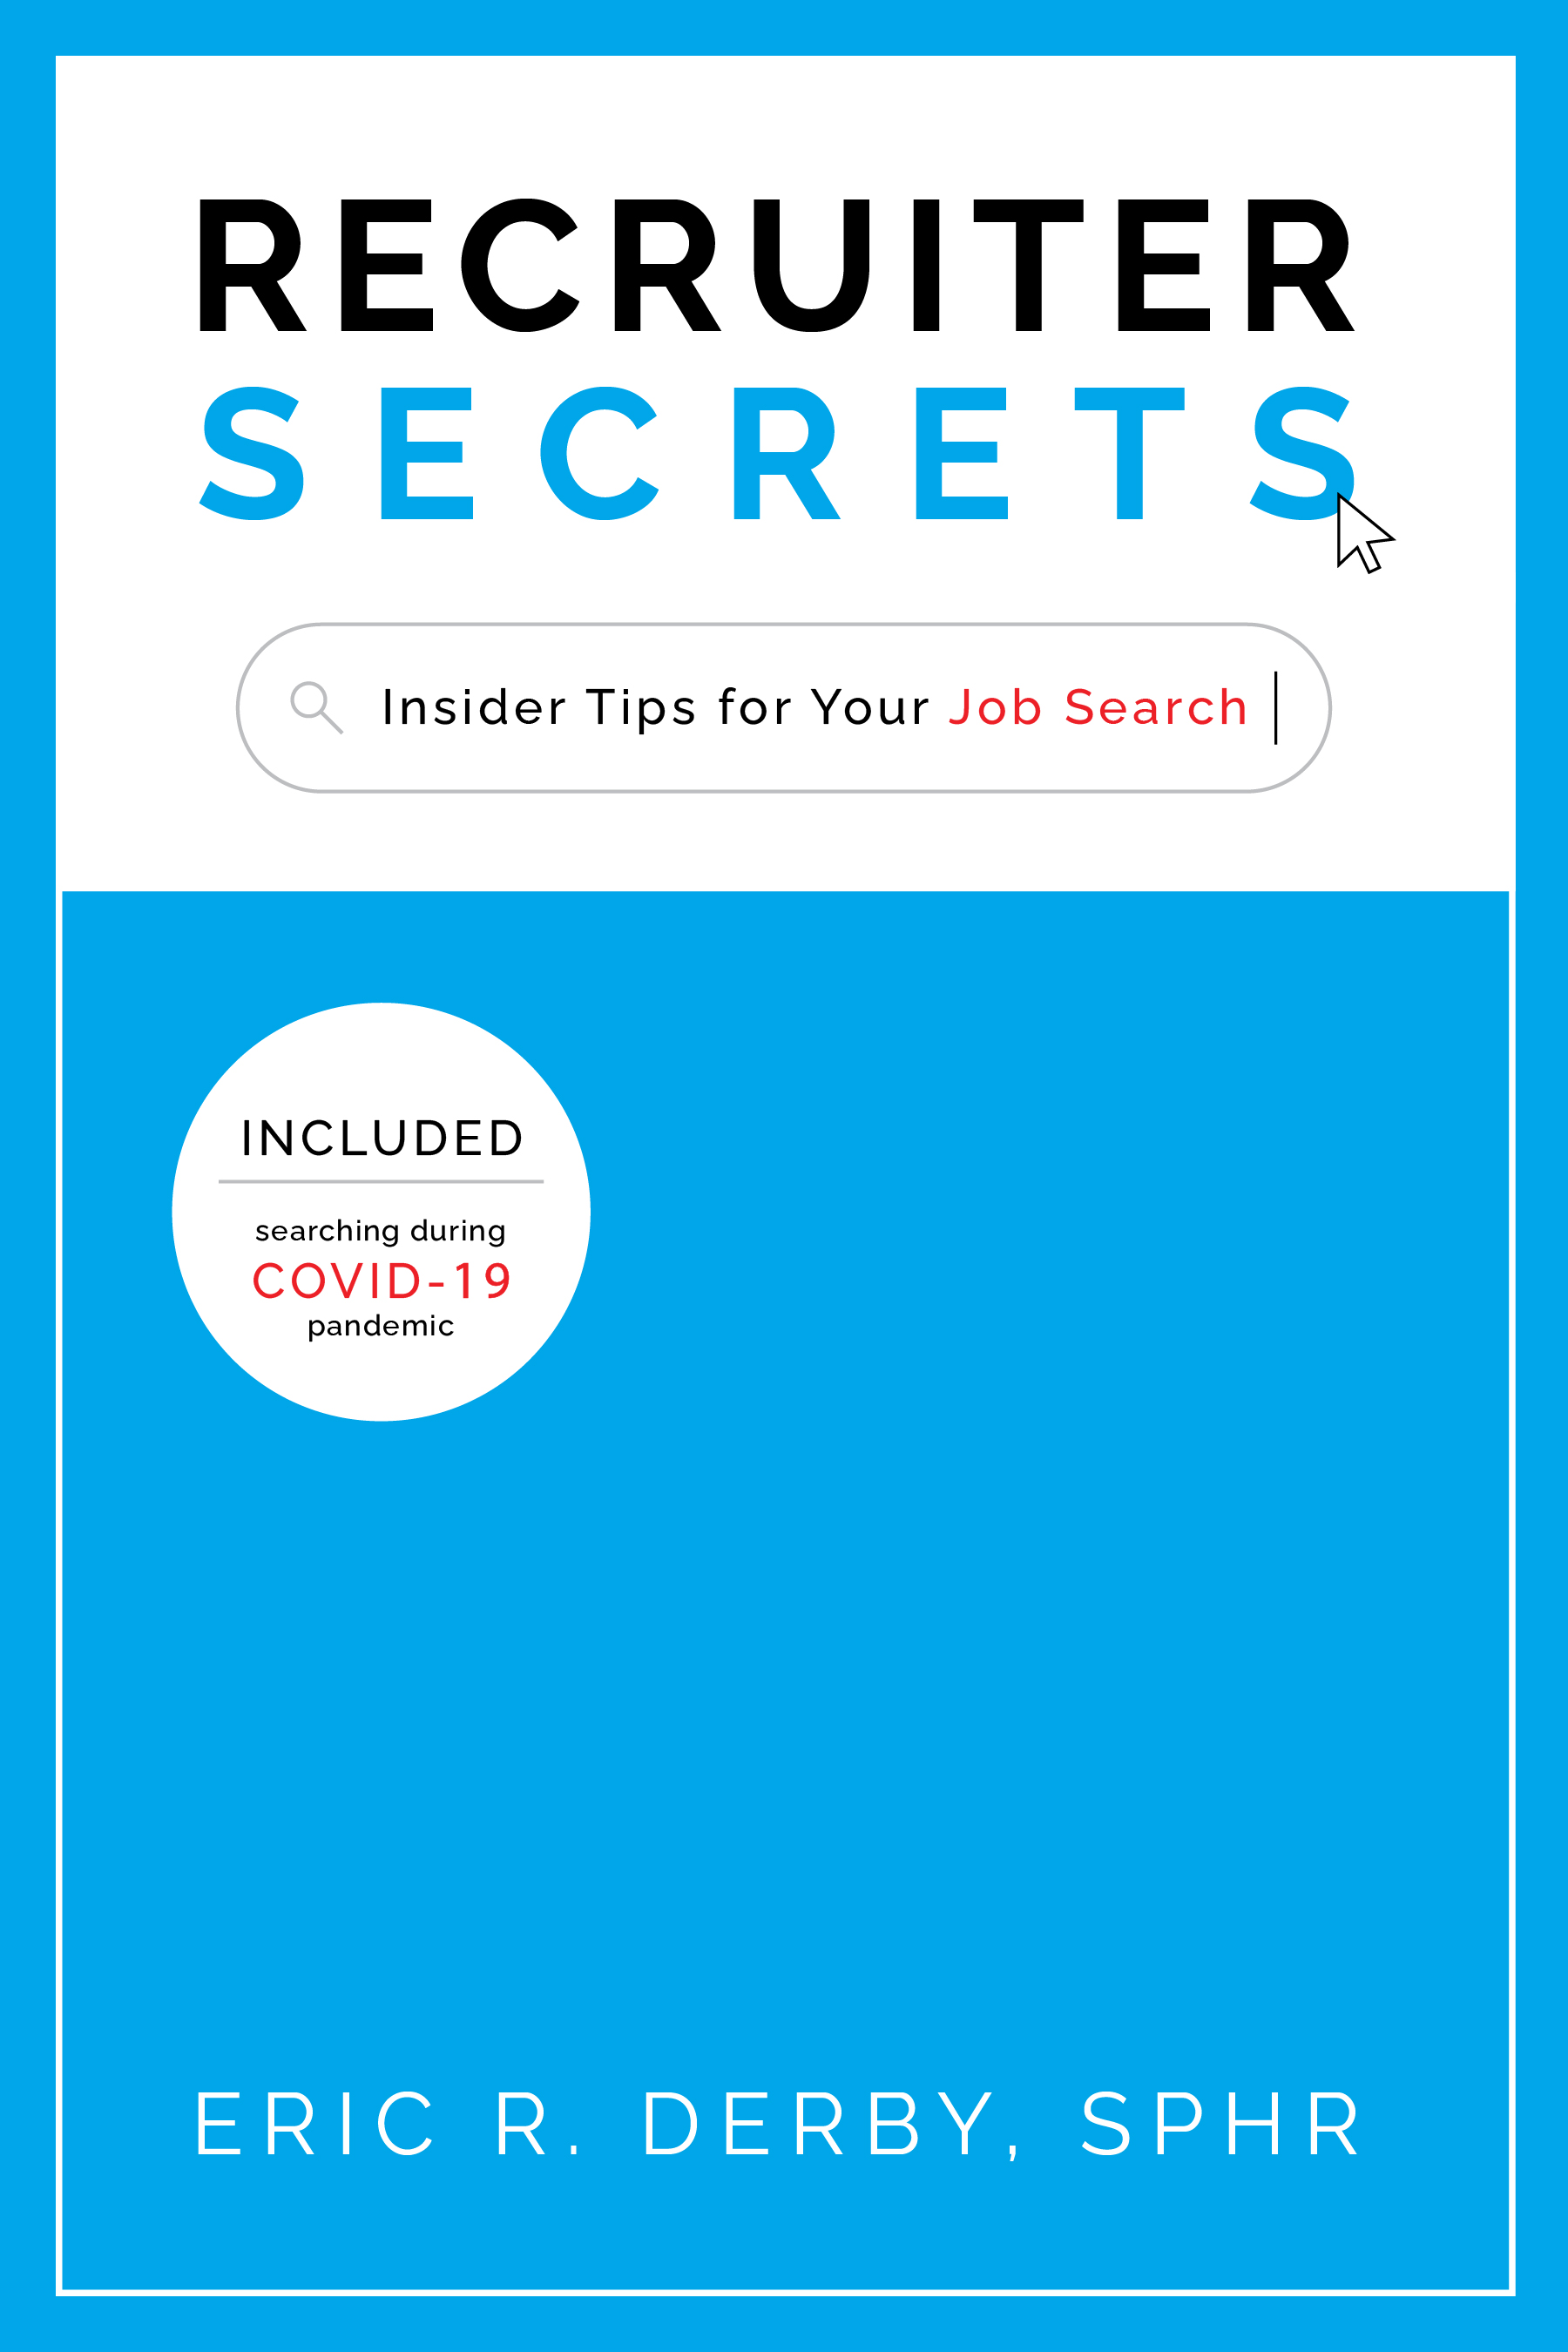 recruiter-secrets-front-cover-final.jpg